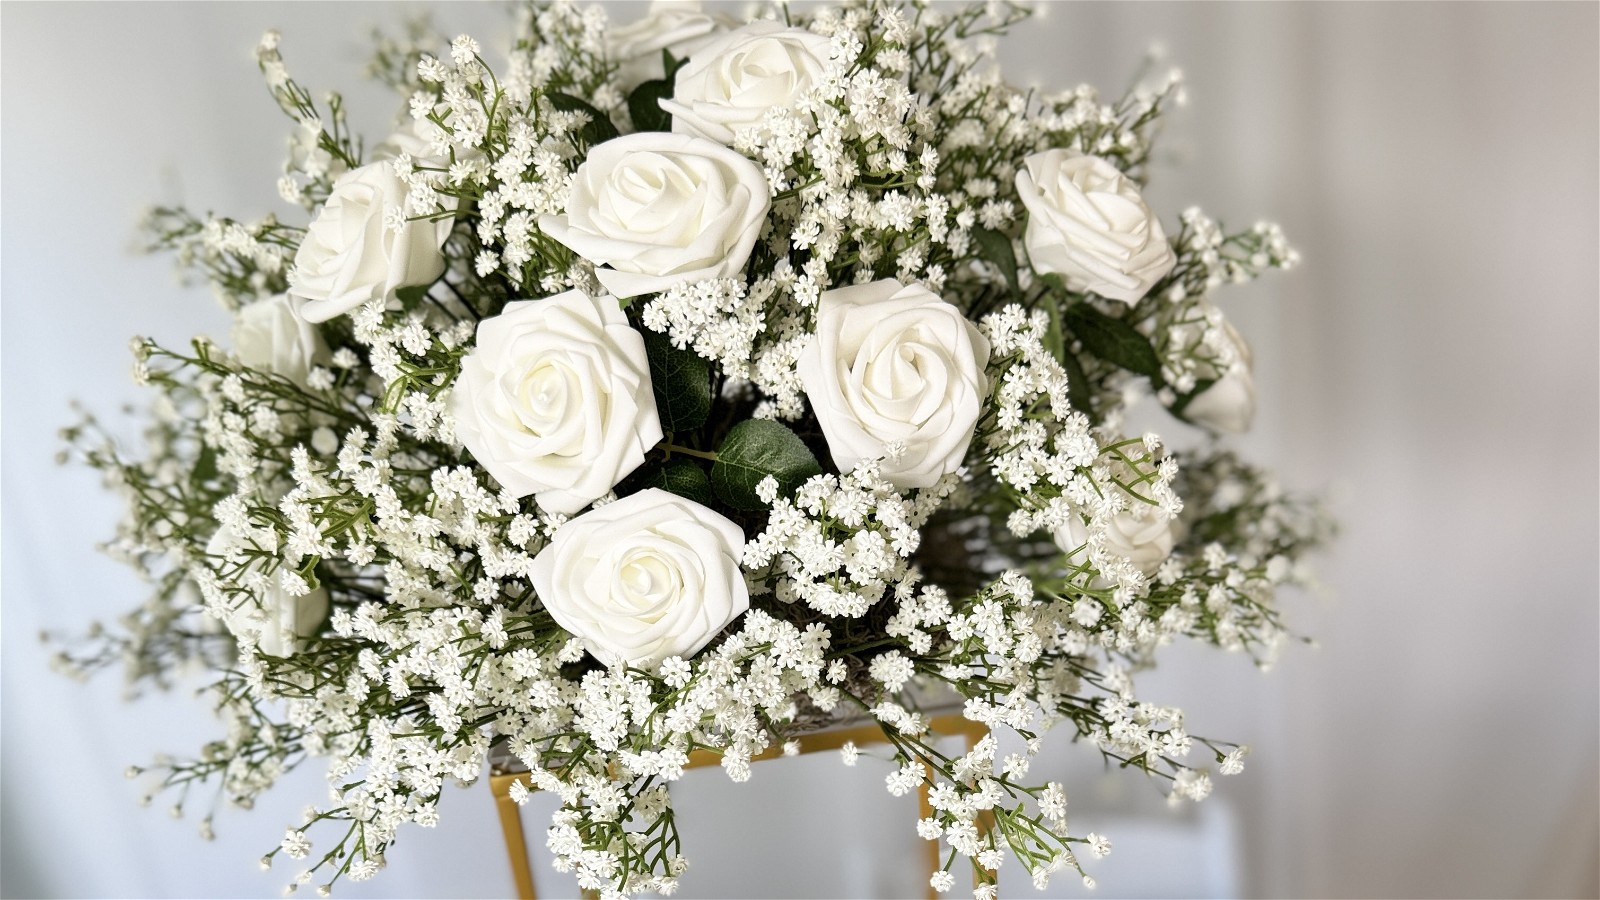 Baby's Breath Flower New Love | DIY Wedding Flowers | FiftyFlowers